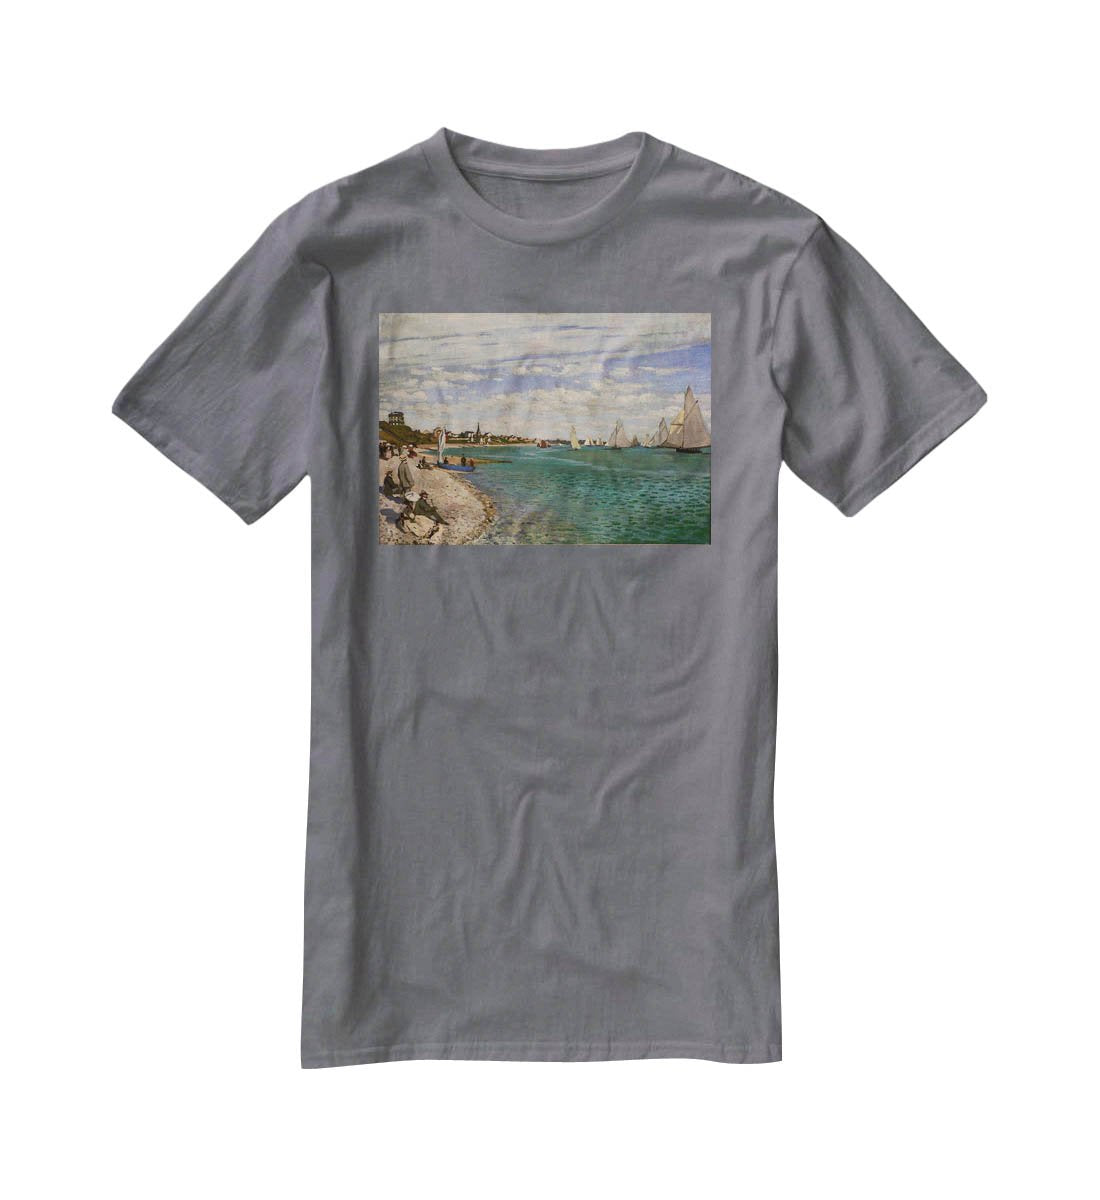 Regatta at St. Adresse by Monet T-Shirt - Canvas Art Rocks - 3